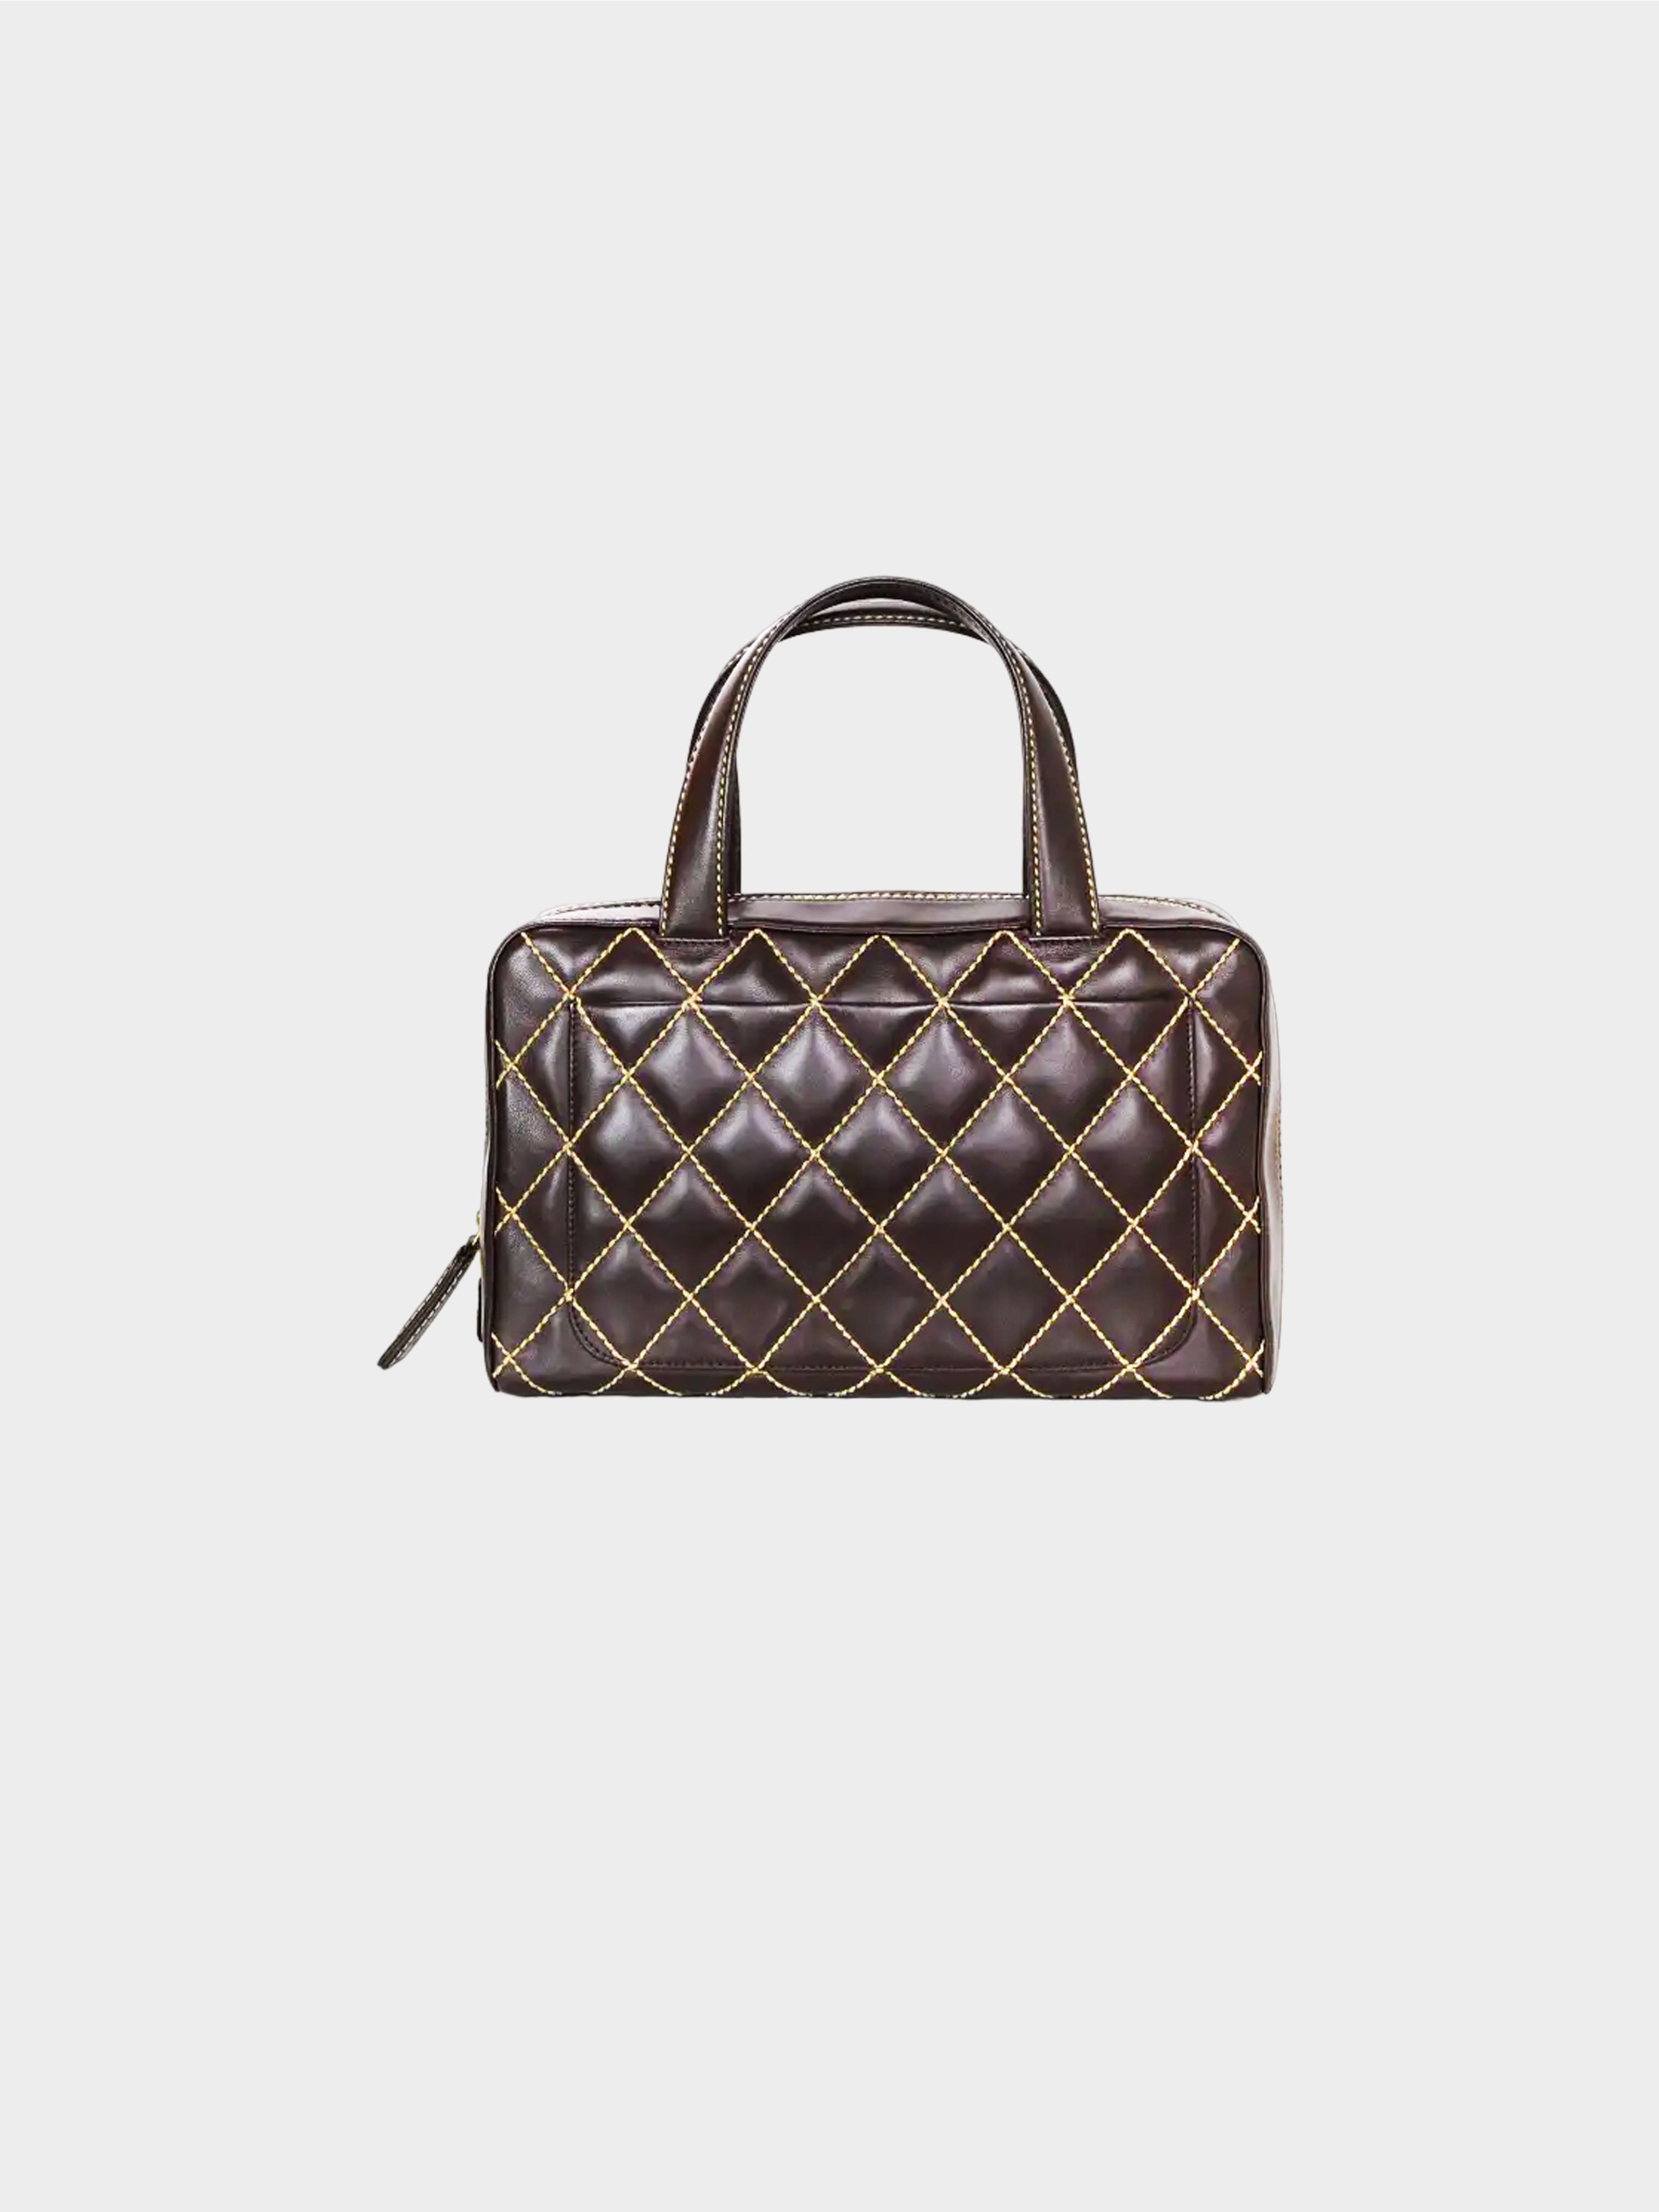 Chanel 2002 Brown Chocolate Leather Surpique Bag